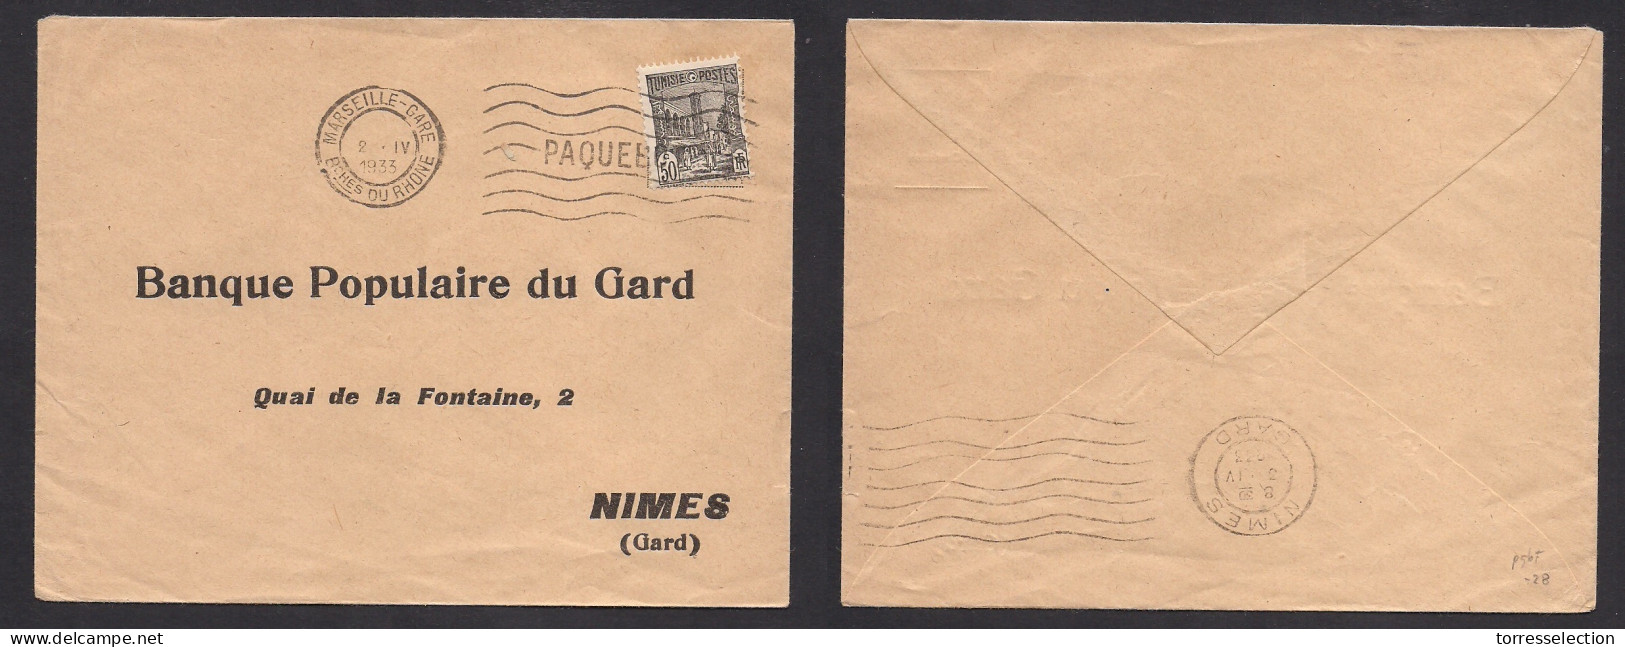 TUNISIA. 1933 (2 Apr) Pqbot Single 50c Fkd Env To France, Nimes (3 Apr) Via Marseille Rolling Pqbt Cachet. XSALE. - Tunisie (1956-...)